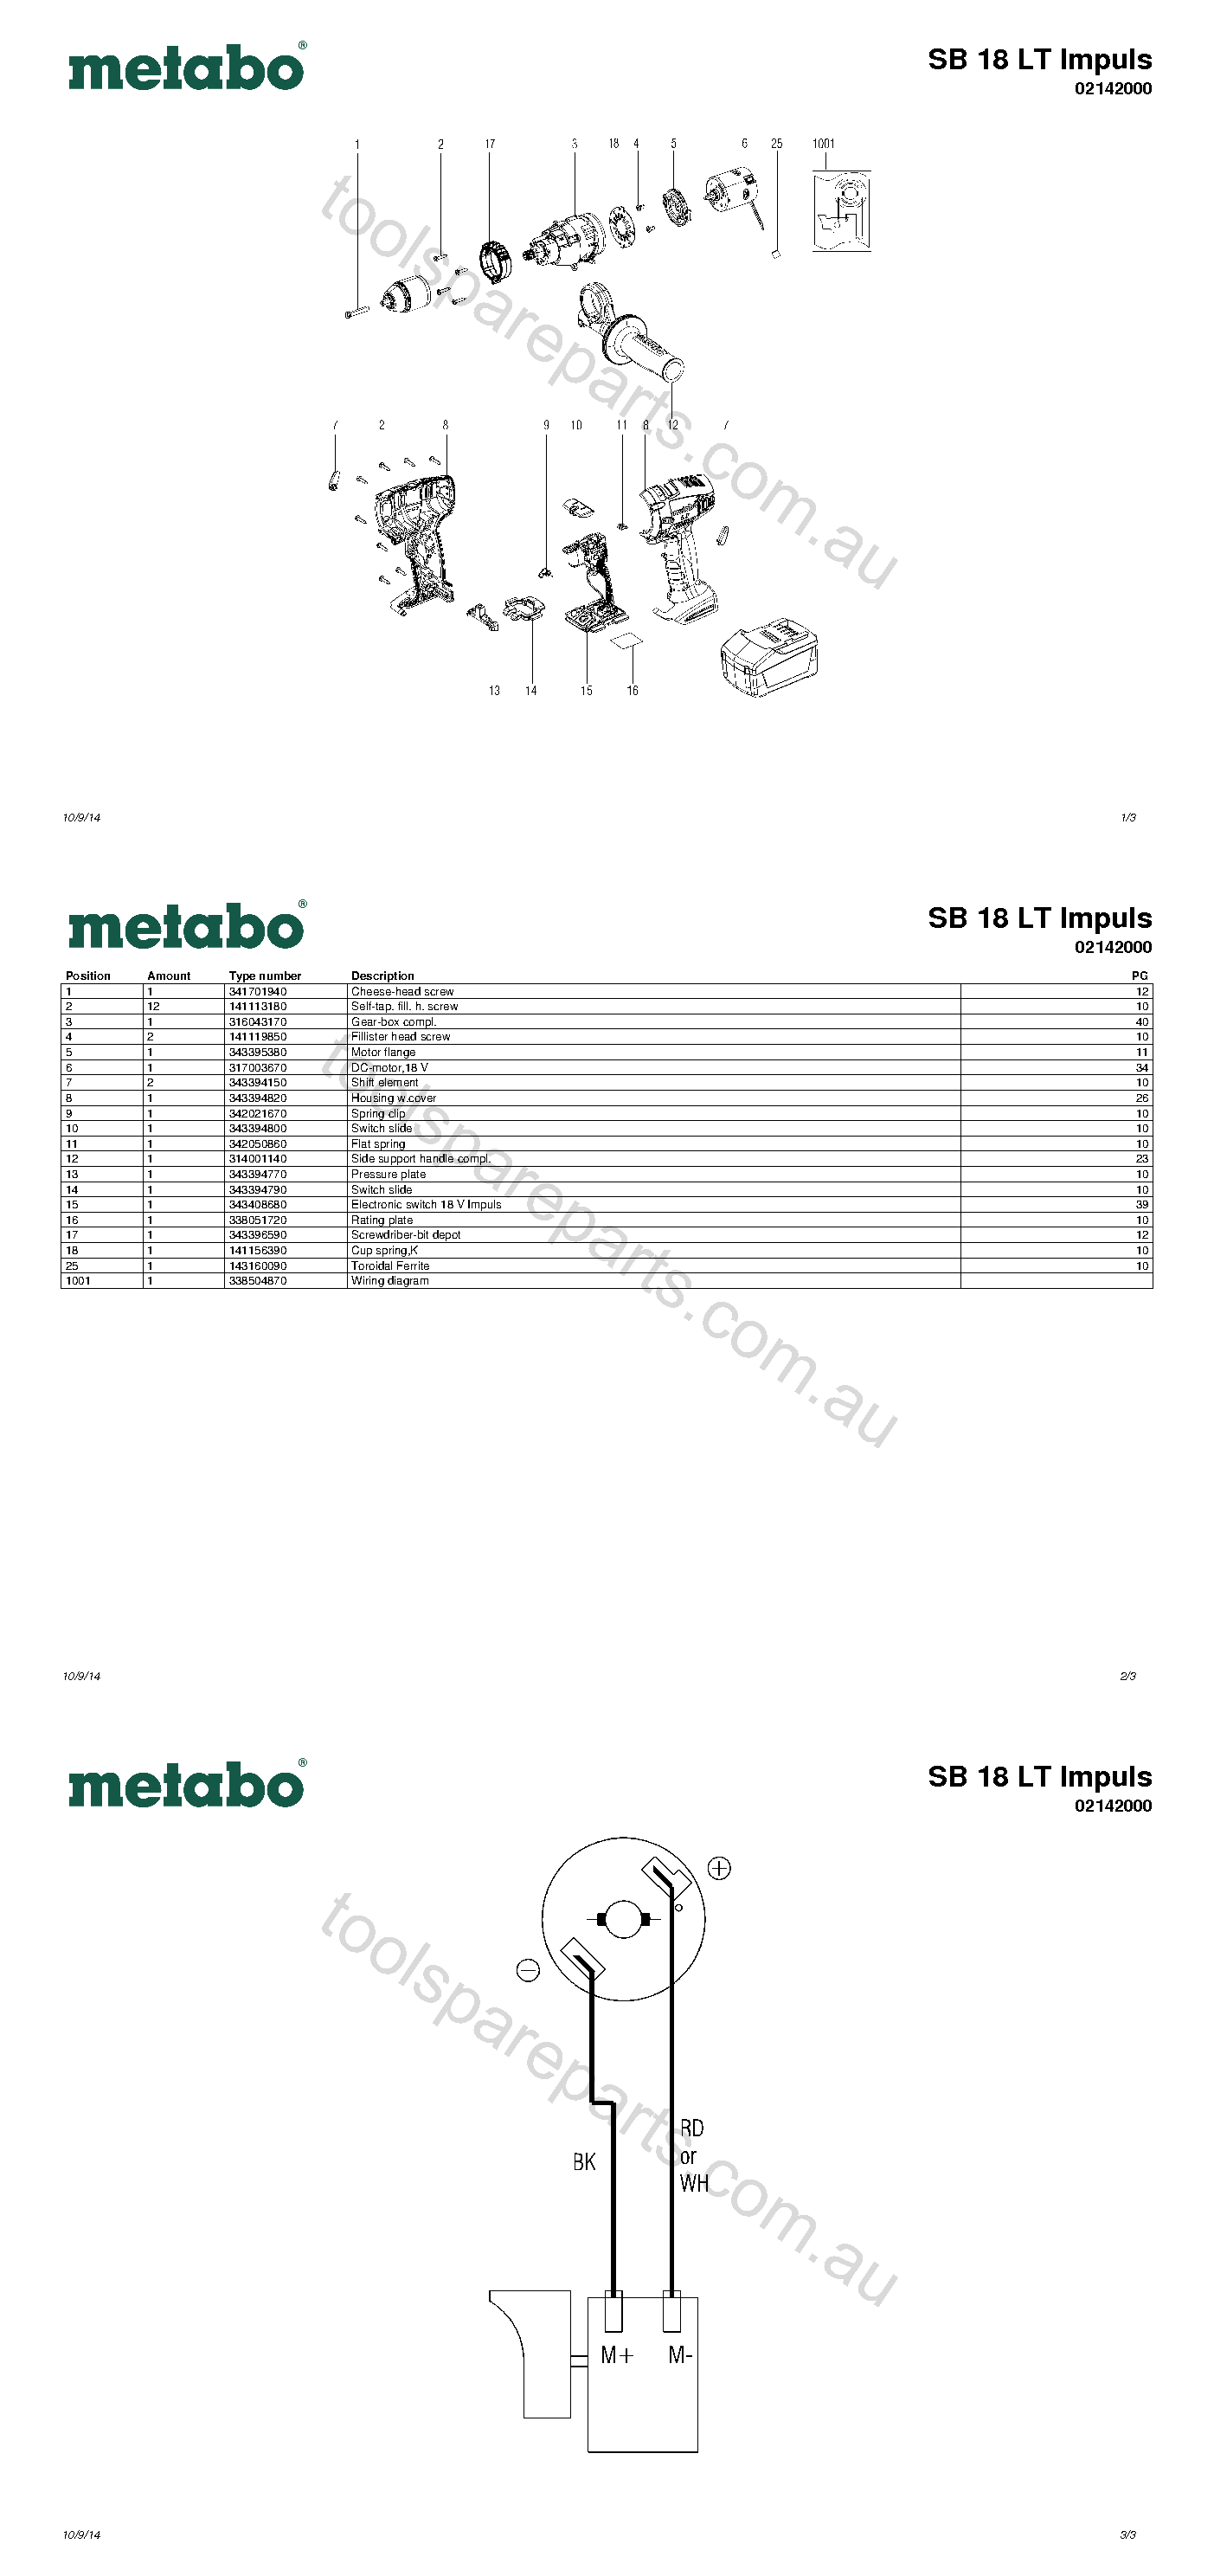 Metabo SB 18 LT Impuls 02142000  Diagram 1